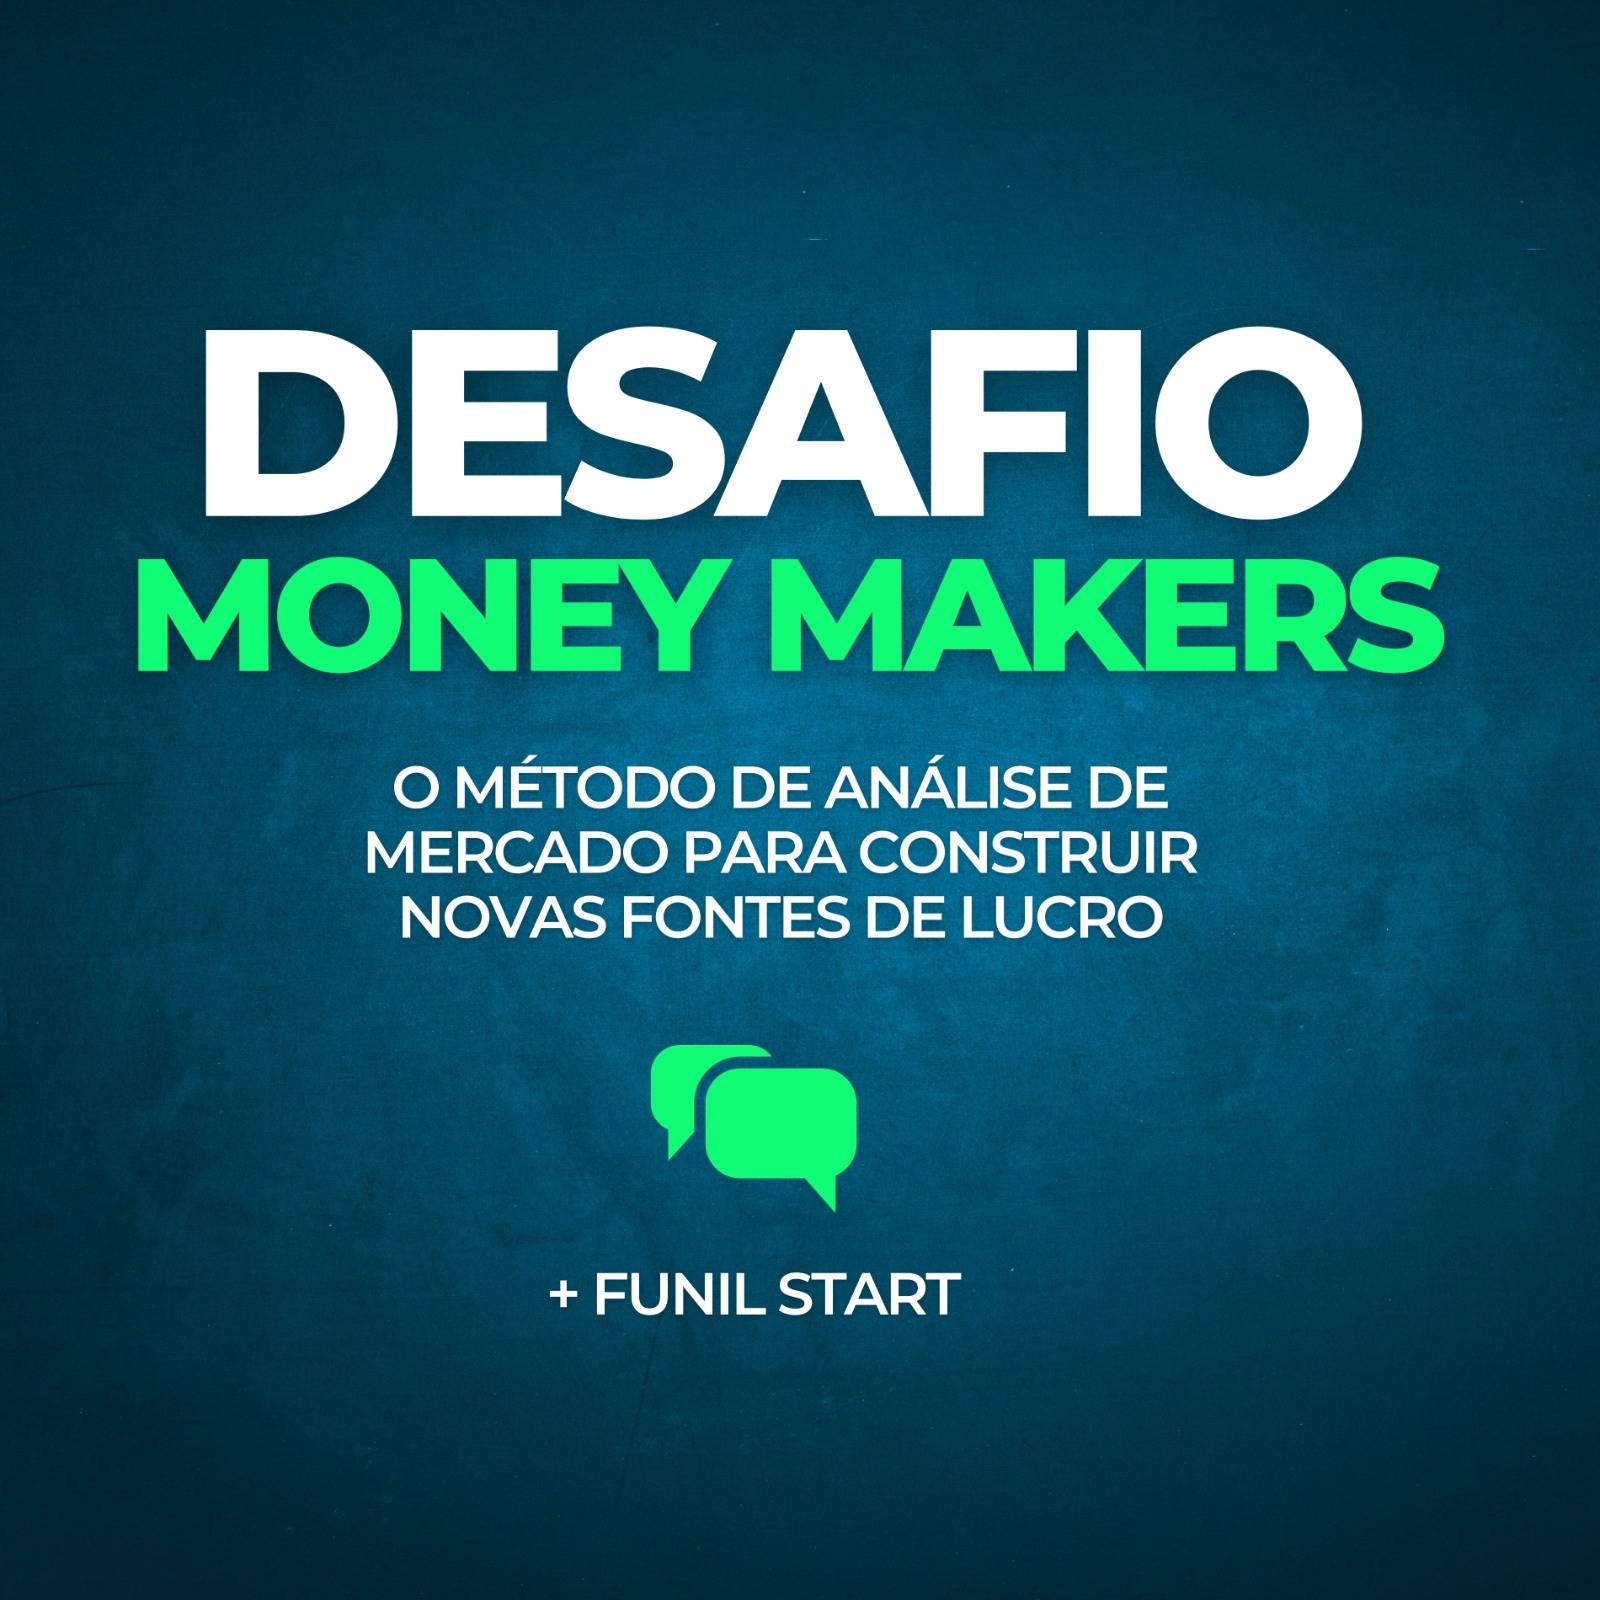 Desafio MoneyMakers - Como Analisar o Mercado e Encontrar Fontes de Lucro + Funil Start 25